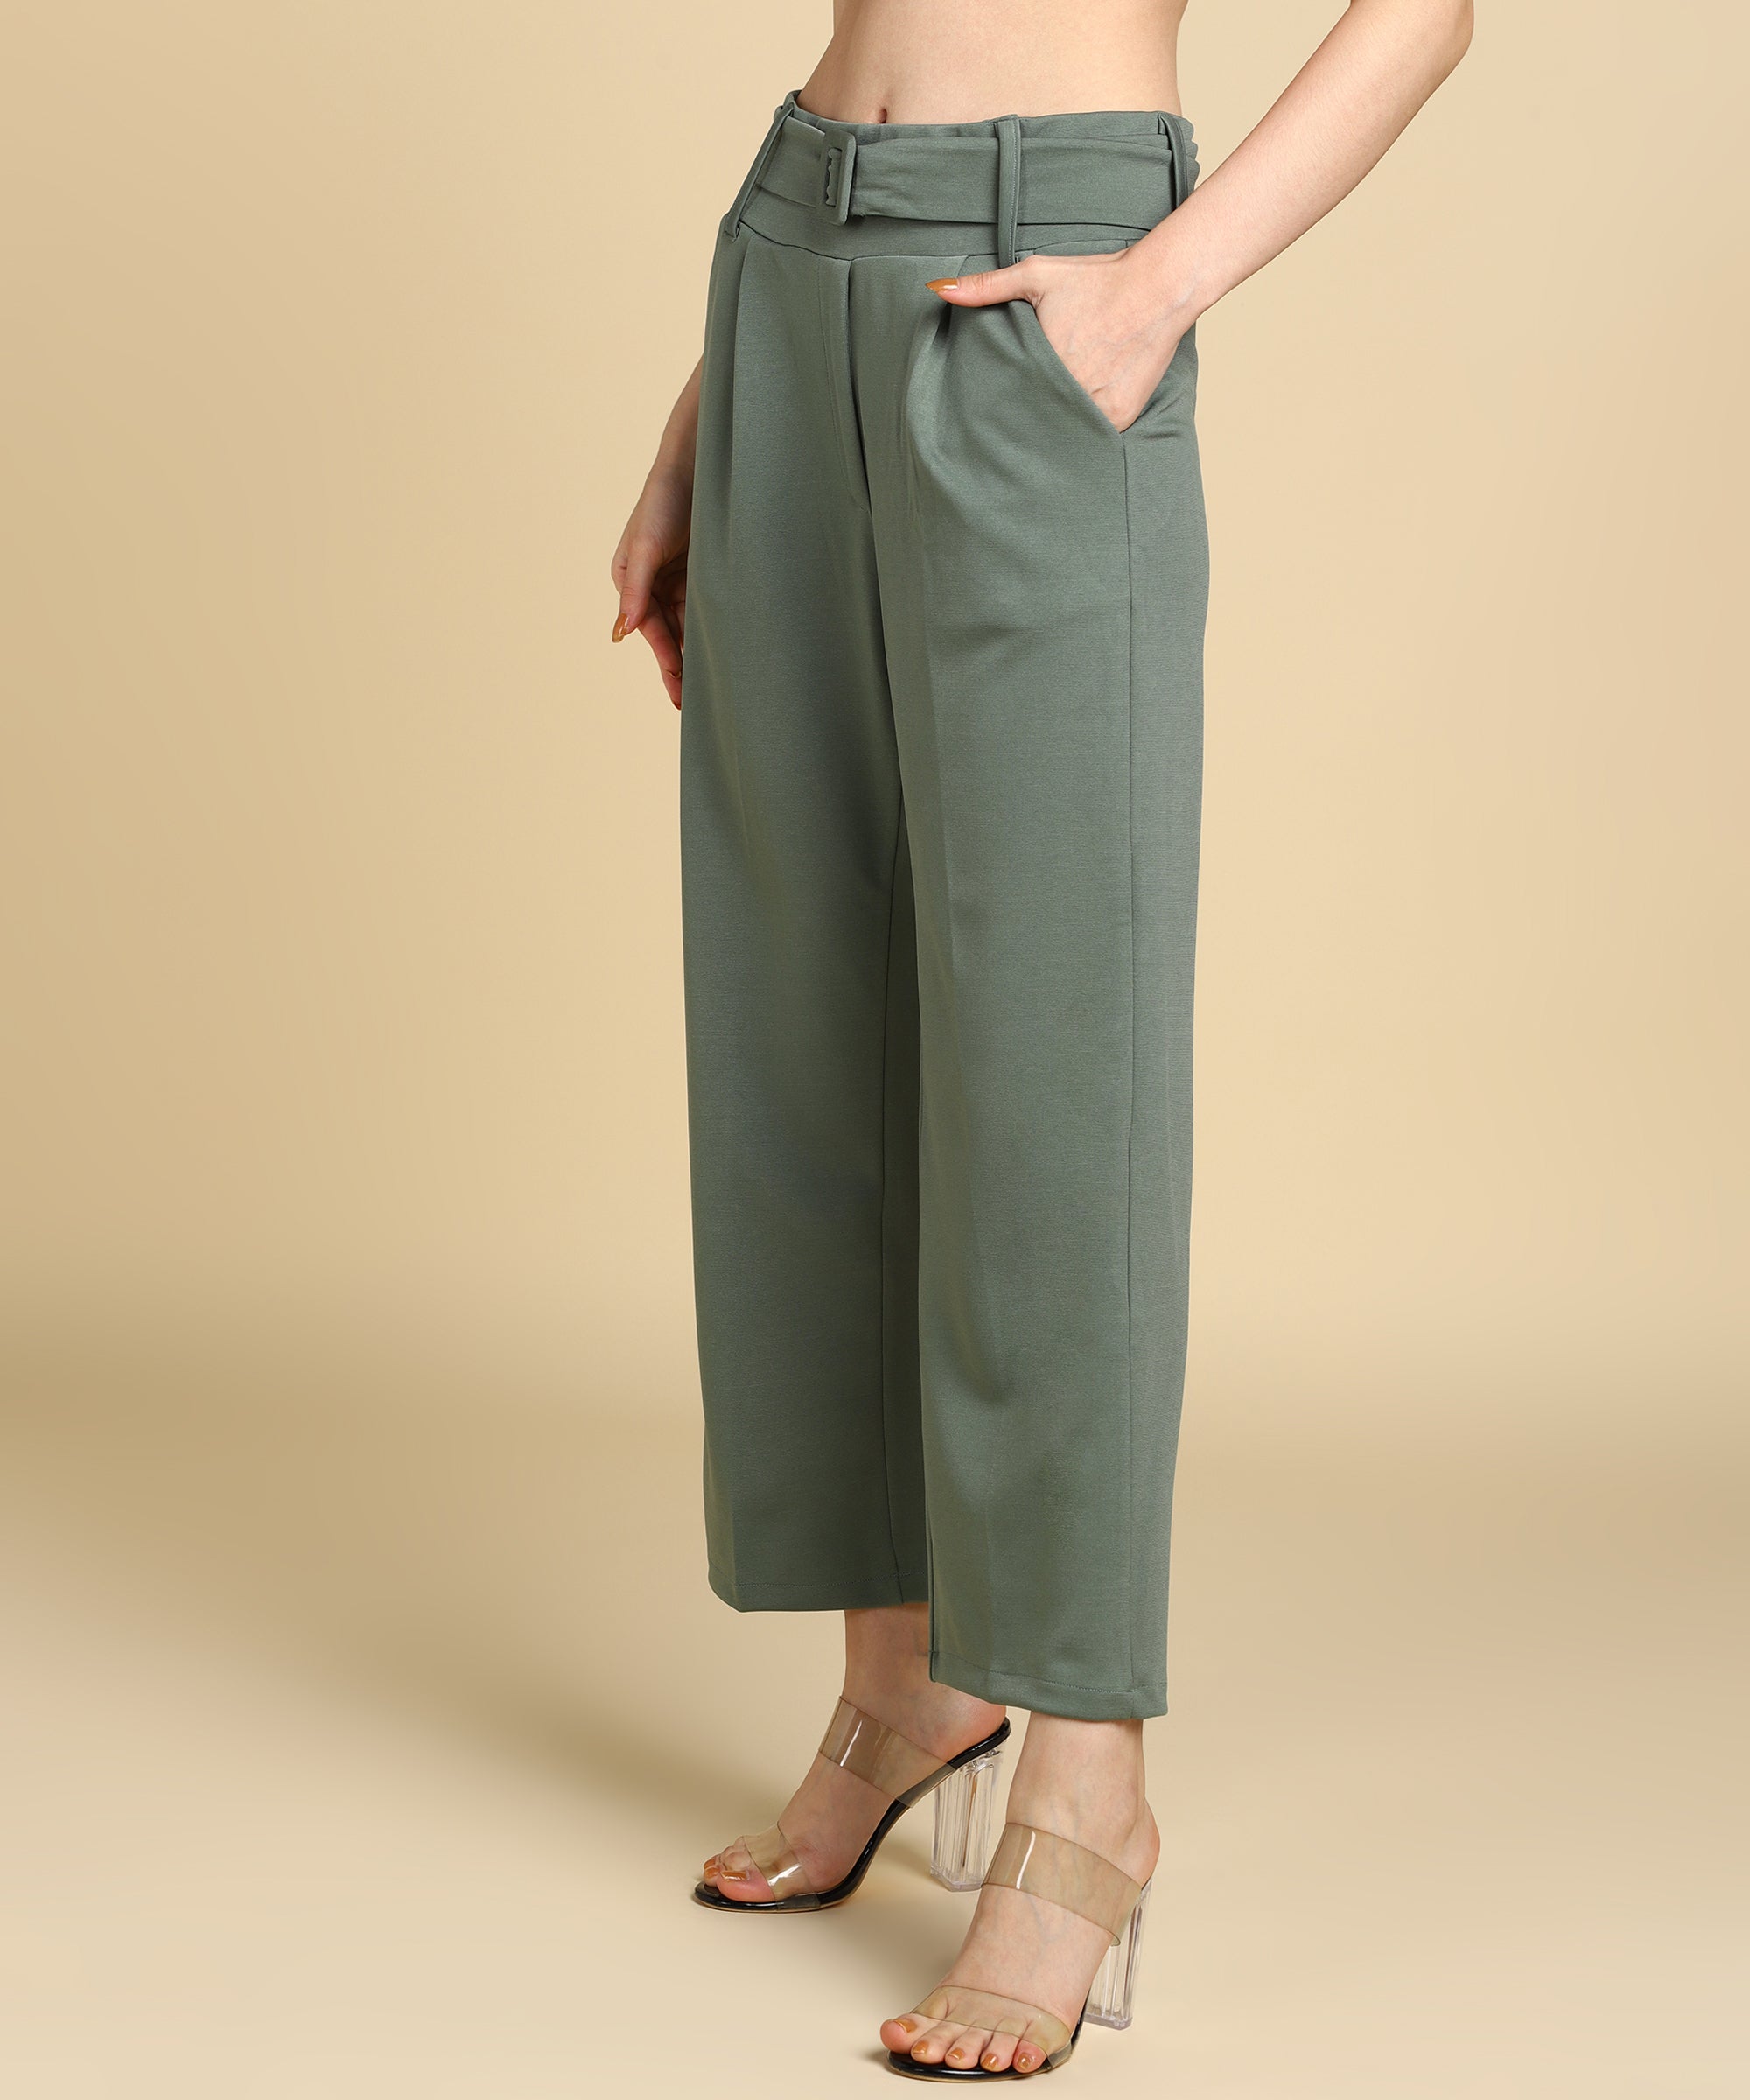 Buy Women Trousers Online | Shop Fashion Trousers for Women